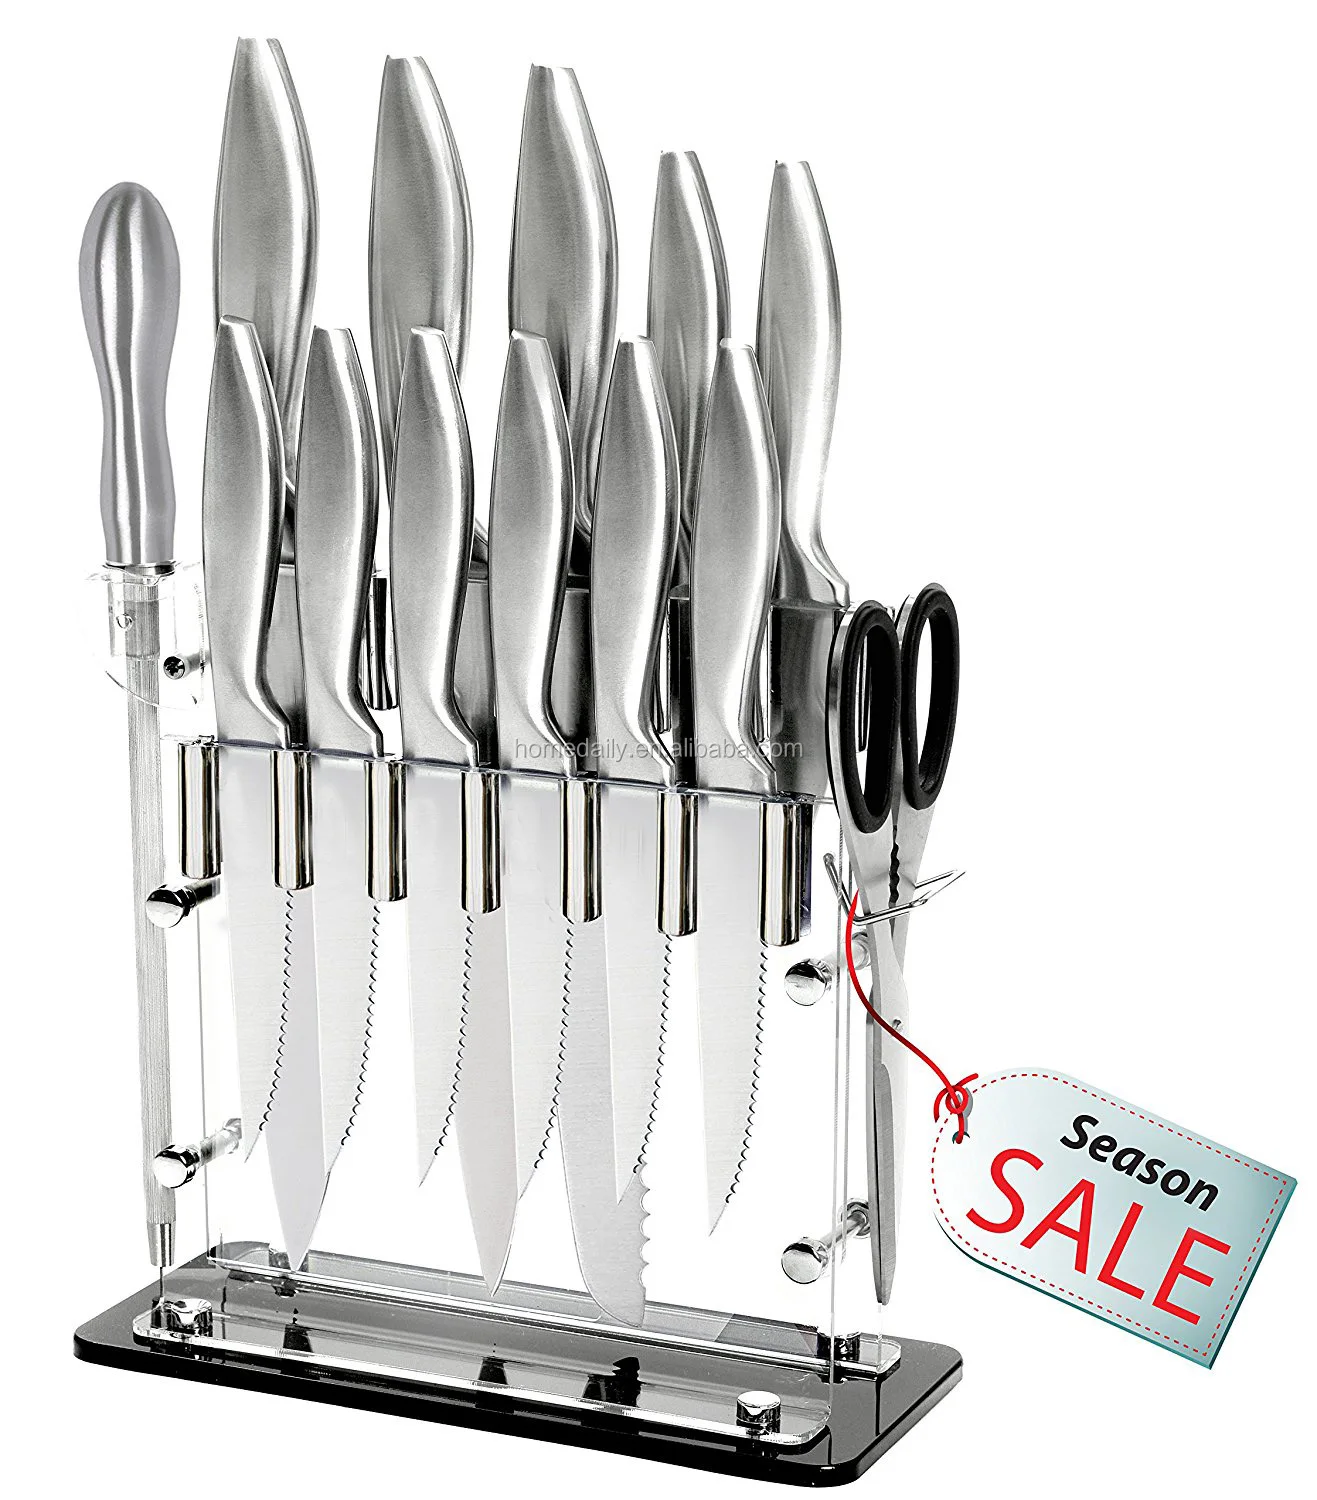 chef knife set sale